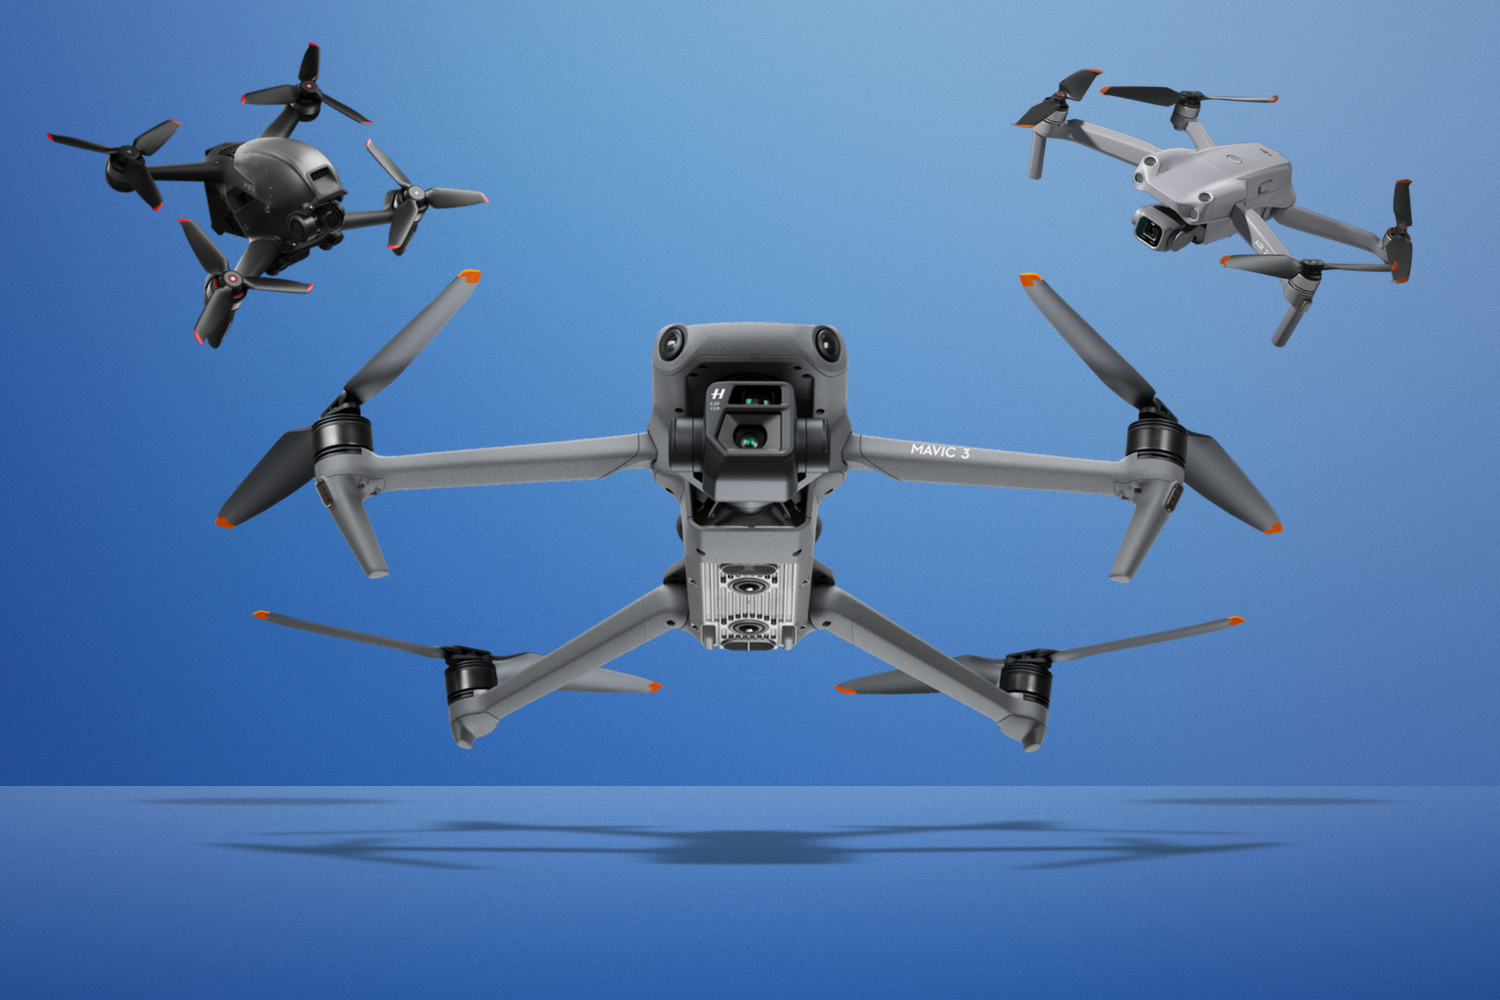 Best DJI drone: which DJI flying machine to buy